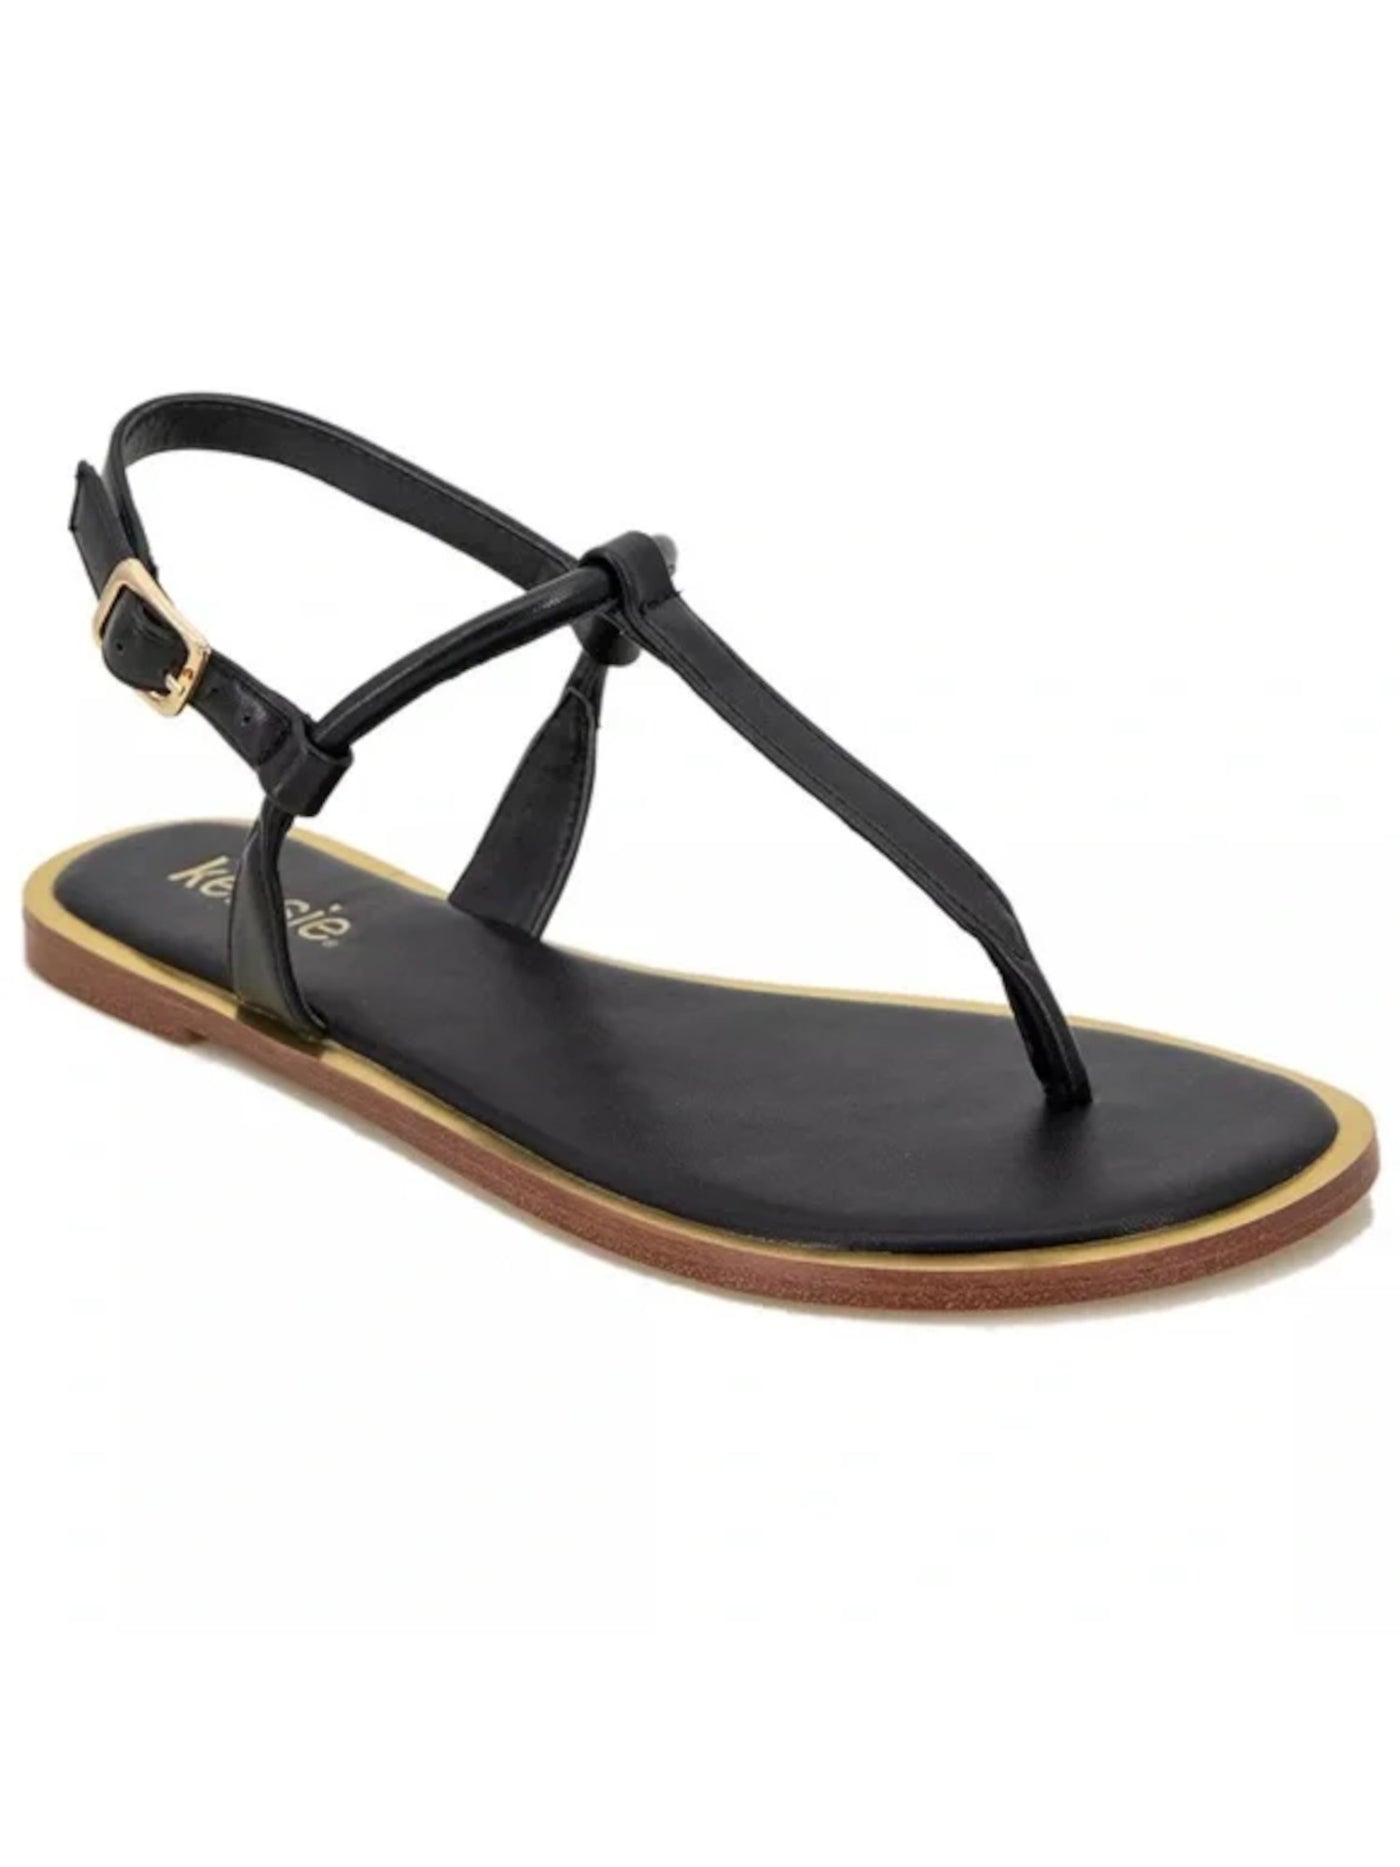 KENSIE Womens Black Color Block T-Strap Padded Bradie Open Toe Buckle Thong Sandals Shoes 9.5 M